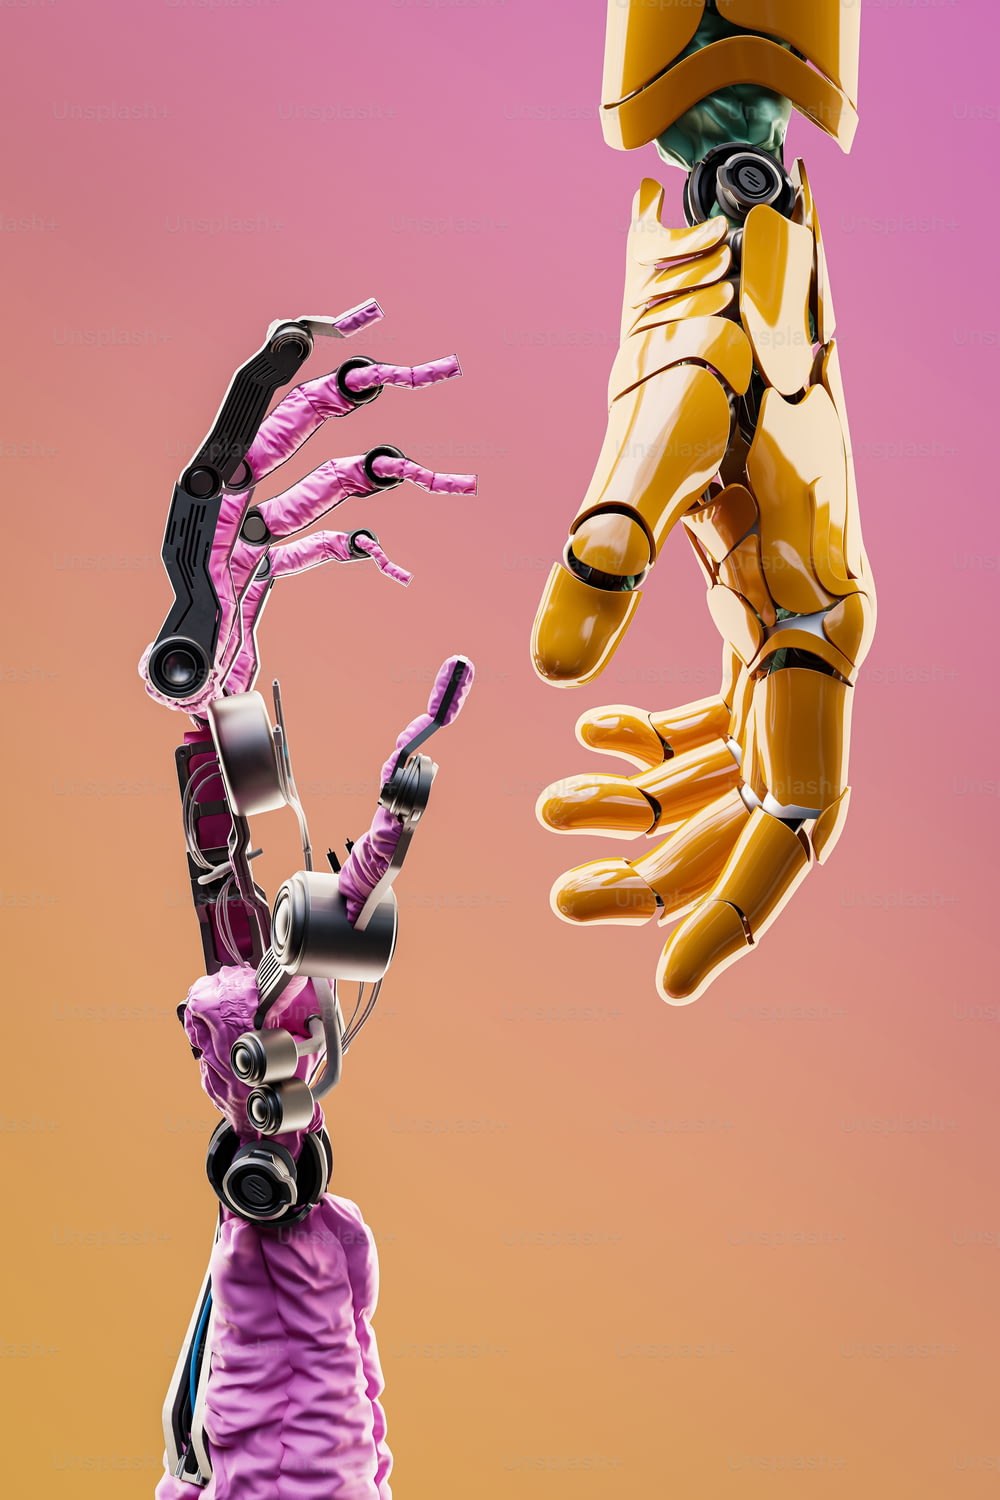 un robot tenant une main humaine en l’air